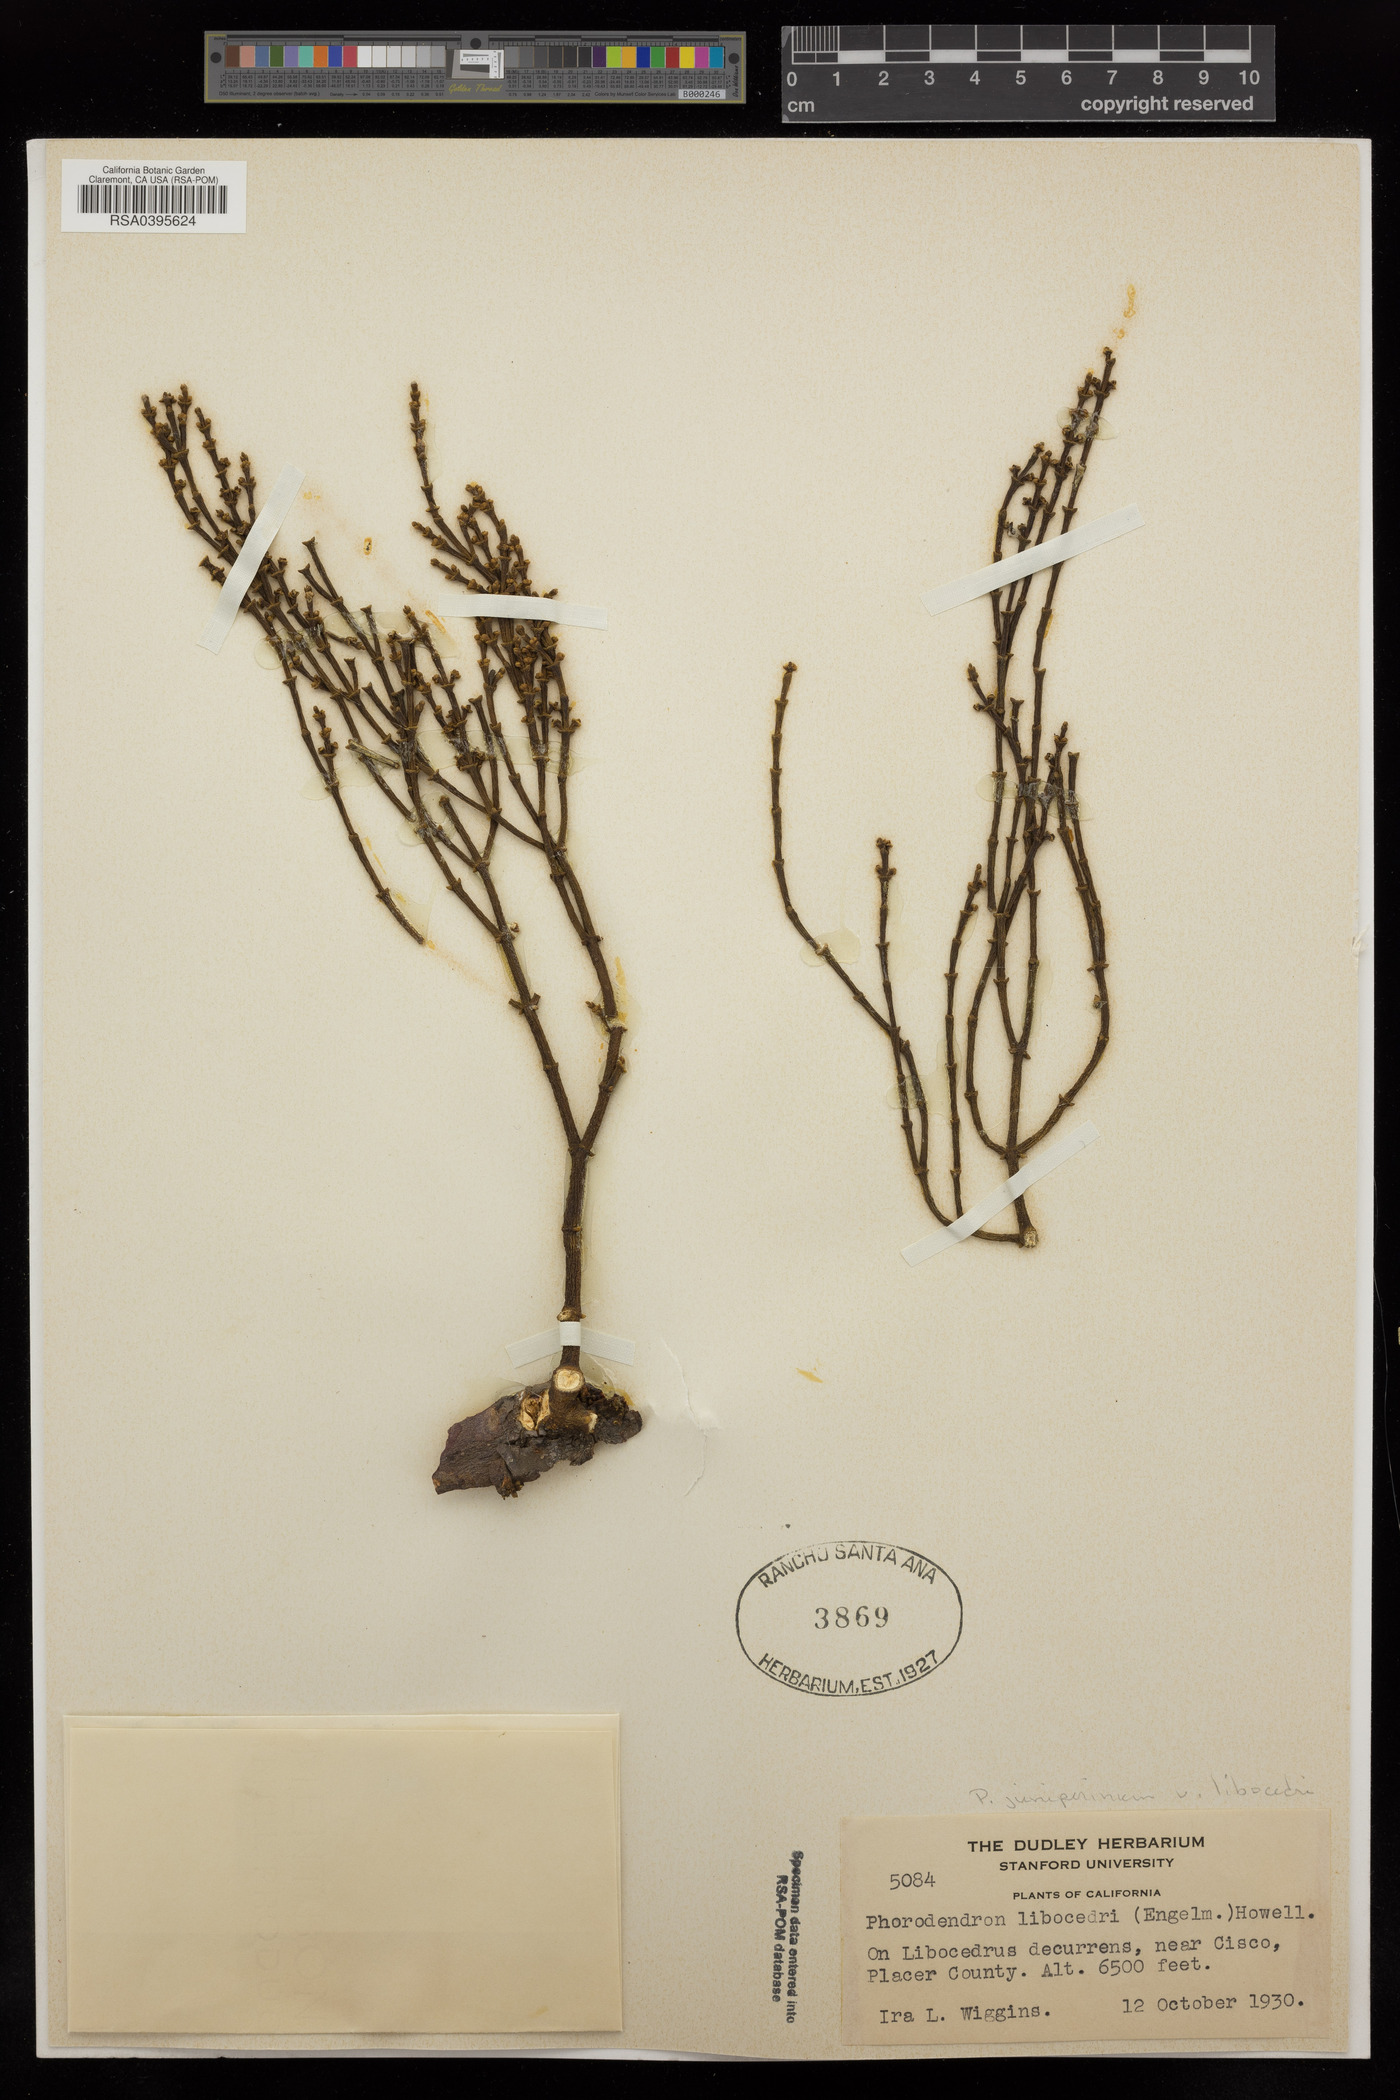 Phoradendron libocedri image